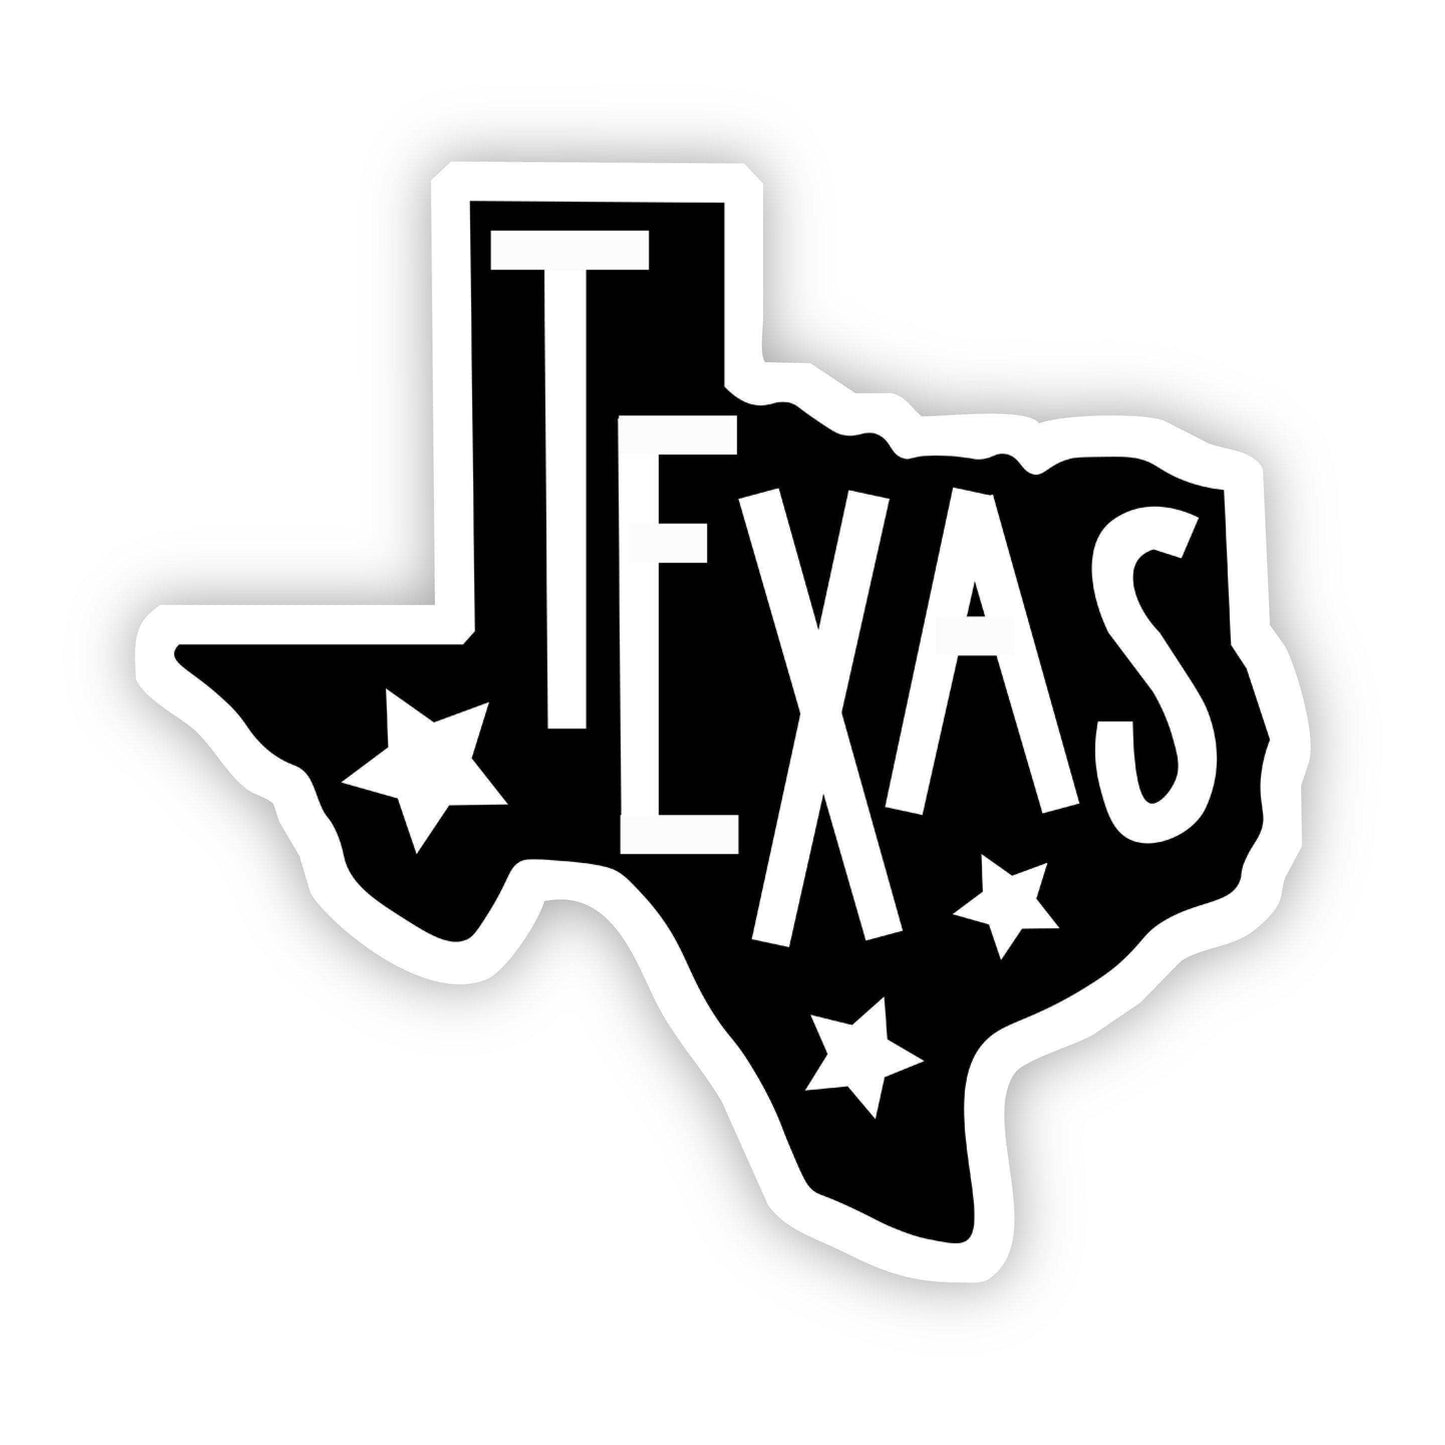 Texas With Stars Sticker